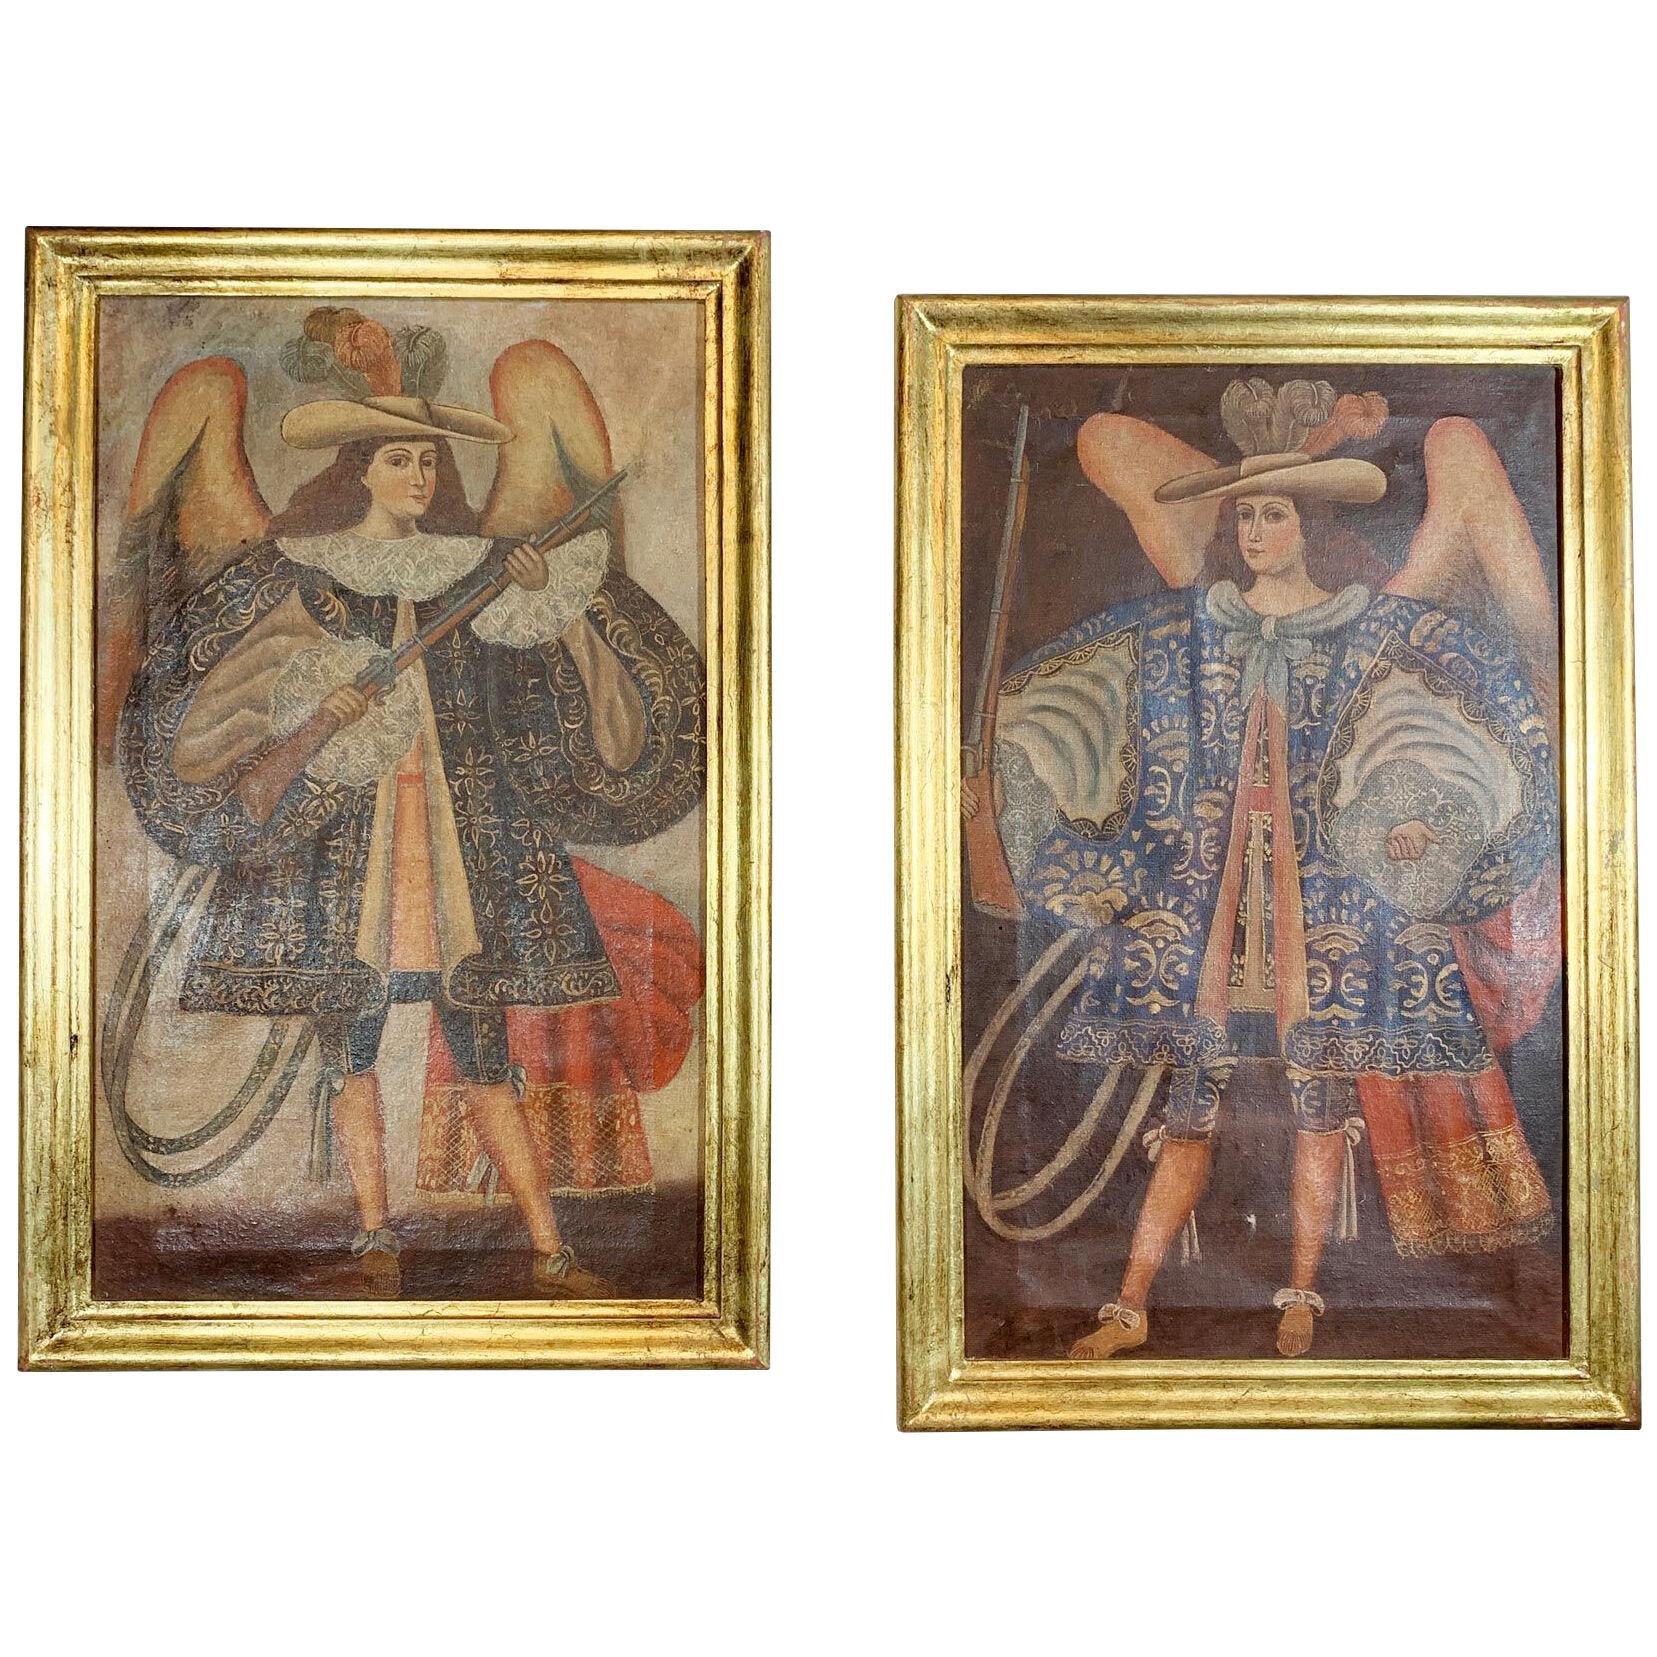 Pair of 19th Century Cuzco School Oil Paintings on Canvas